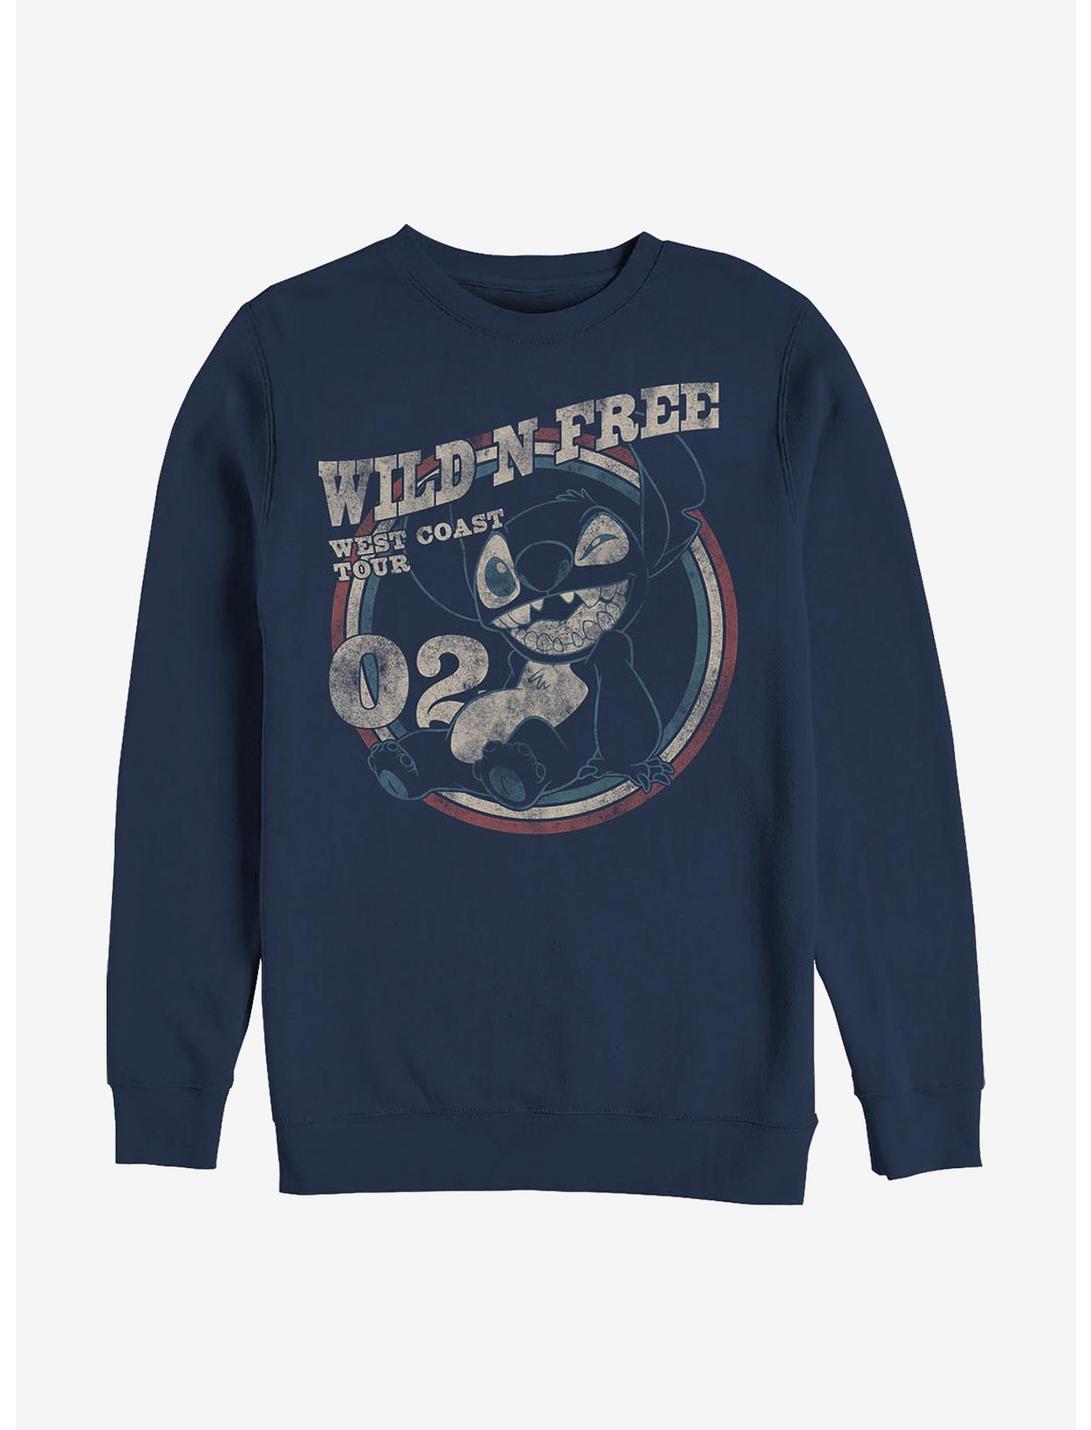 Disney Lilo & Stitch Wild N Free Crew Sweatshirt, NAVY, hi-res